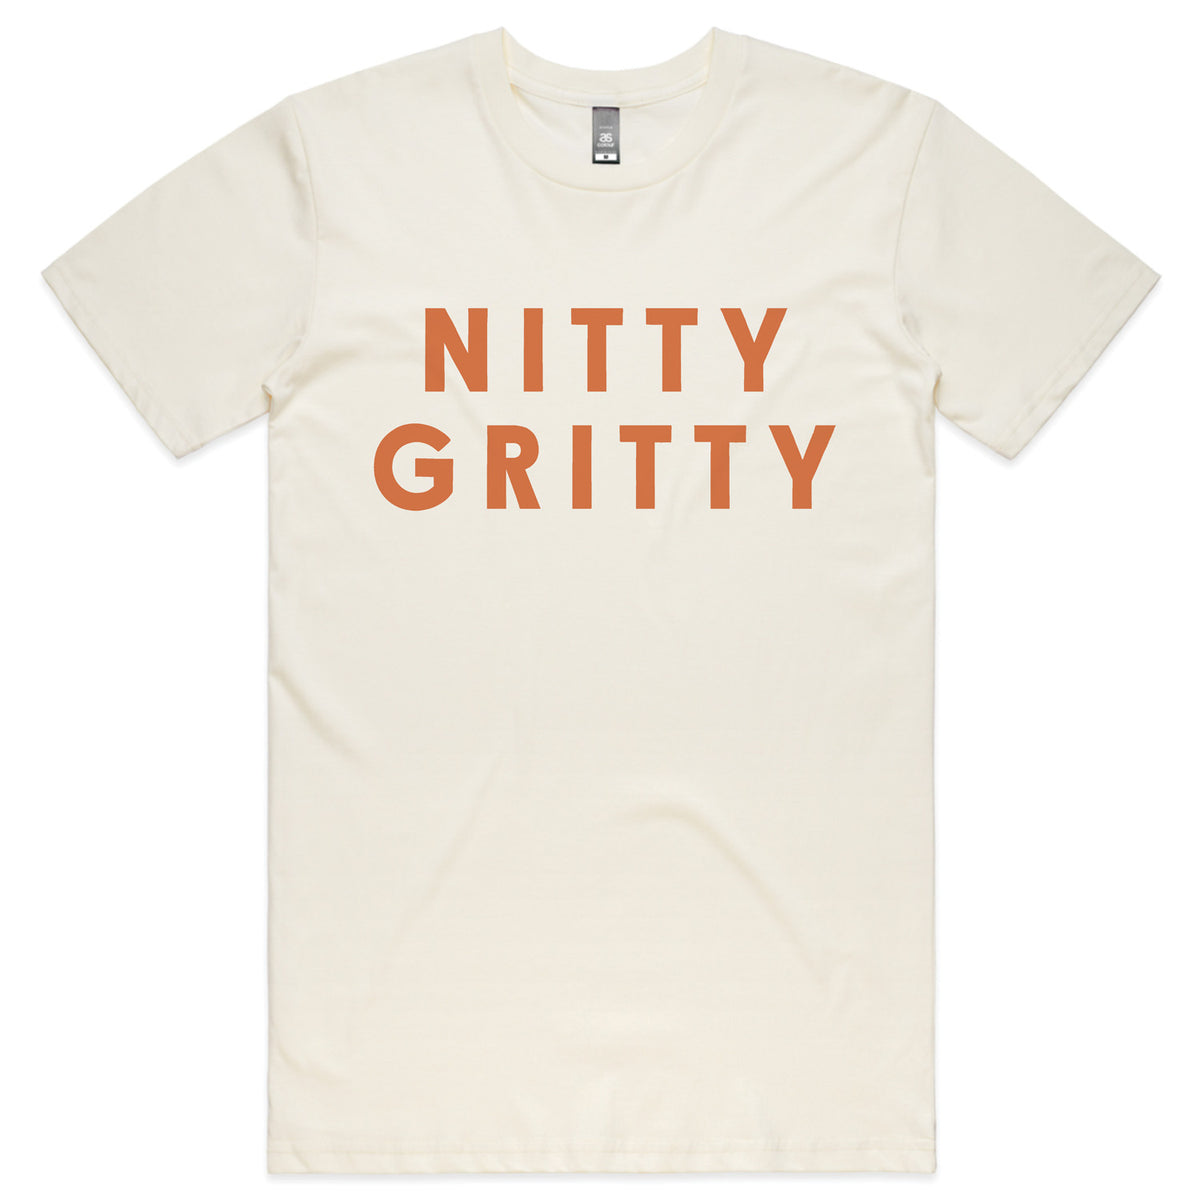 Nitty Gritty T-shirt